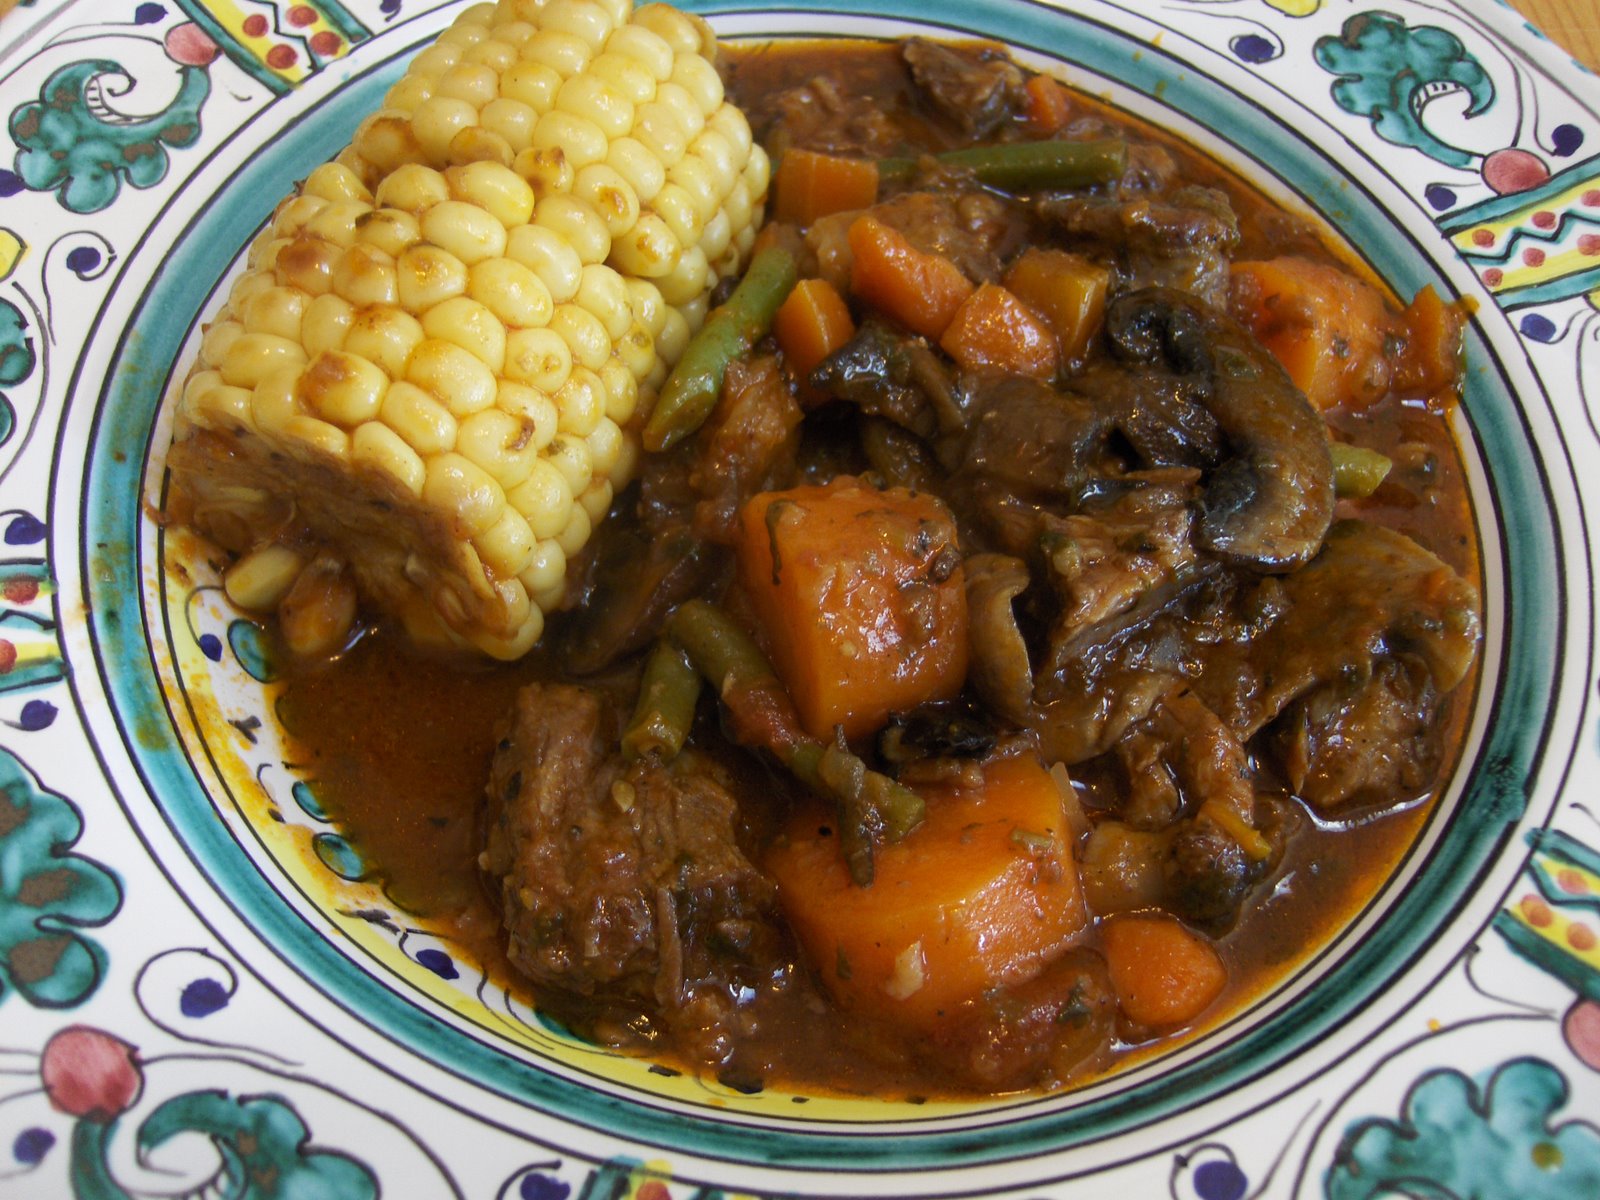 [Ox+Tail+soup+w+corn+on+the+cob,+carrots,+string+beans,+parsley,+onions,+garlic.JPG]